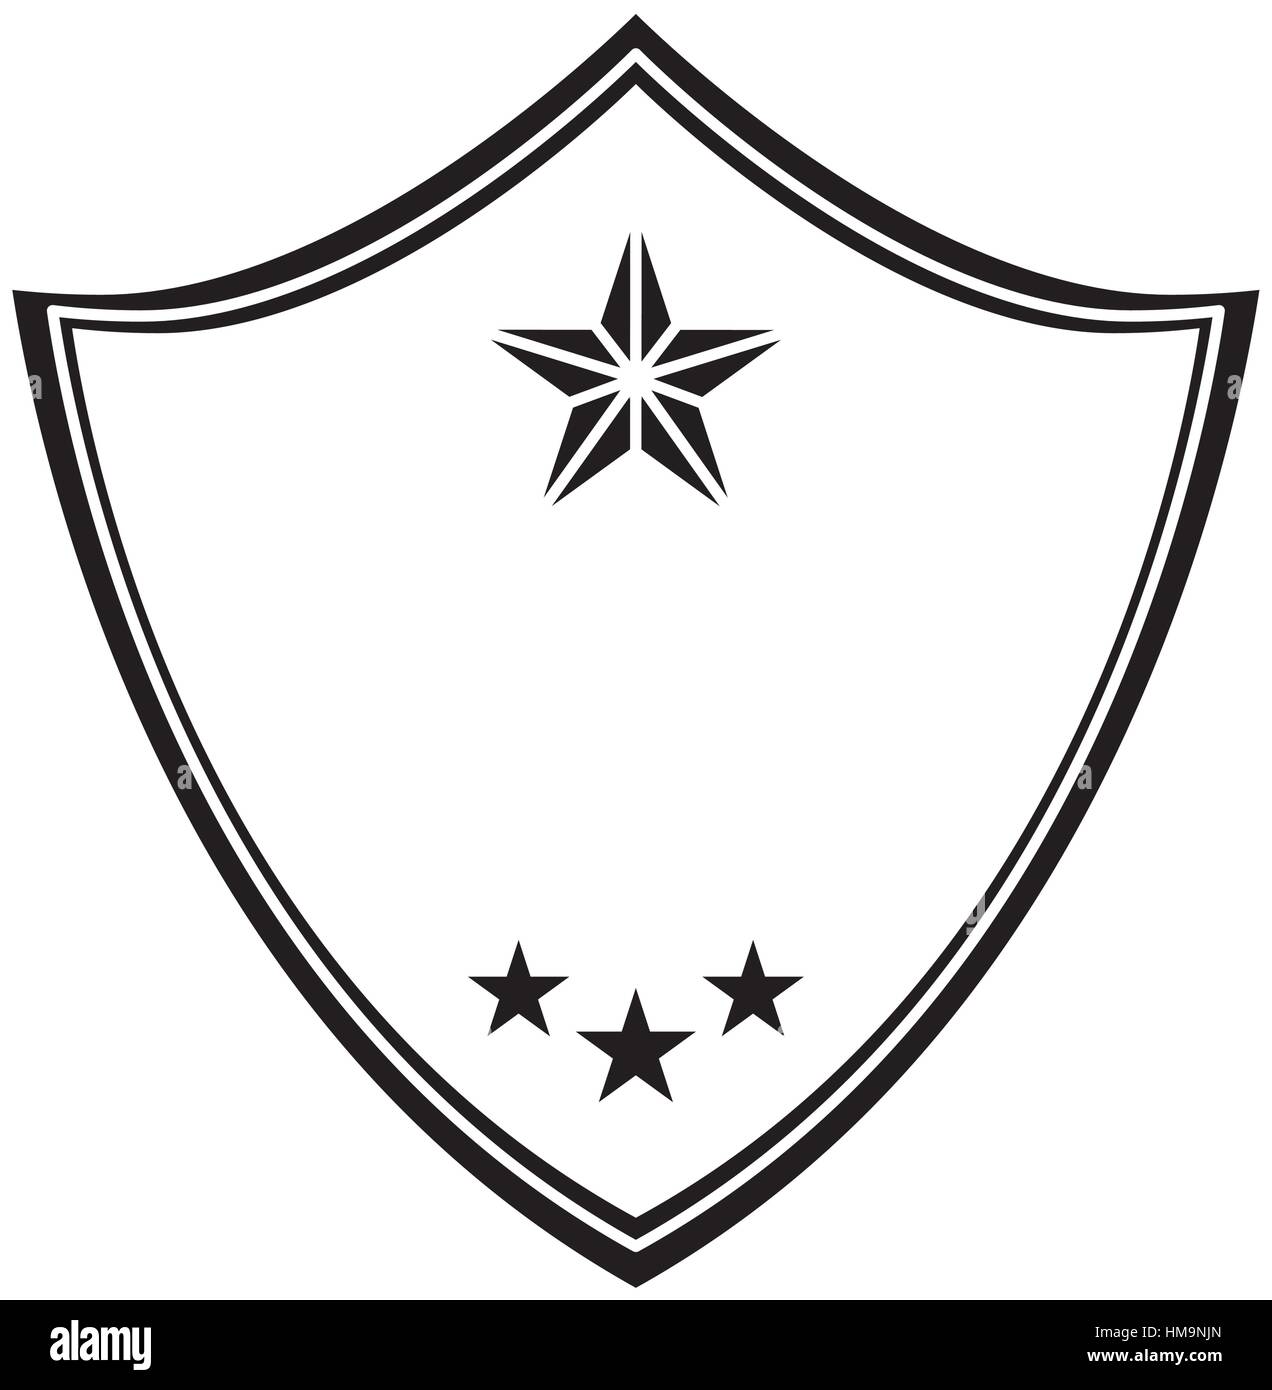 police emblem icon image vector illustration design Stock Vector